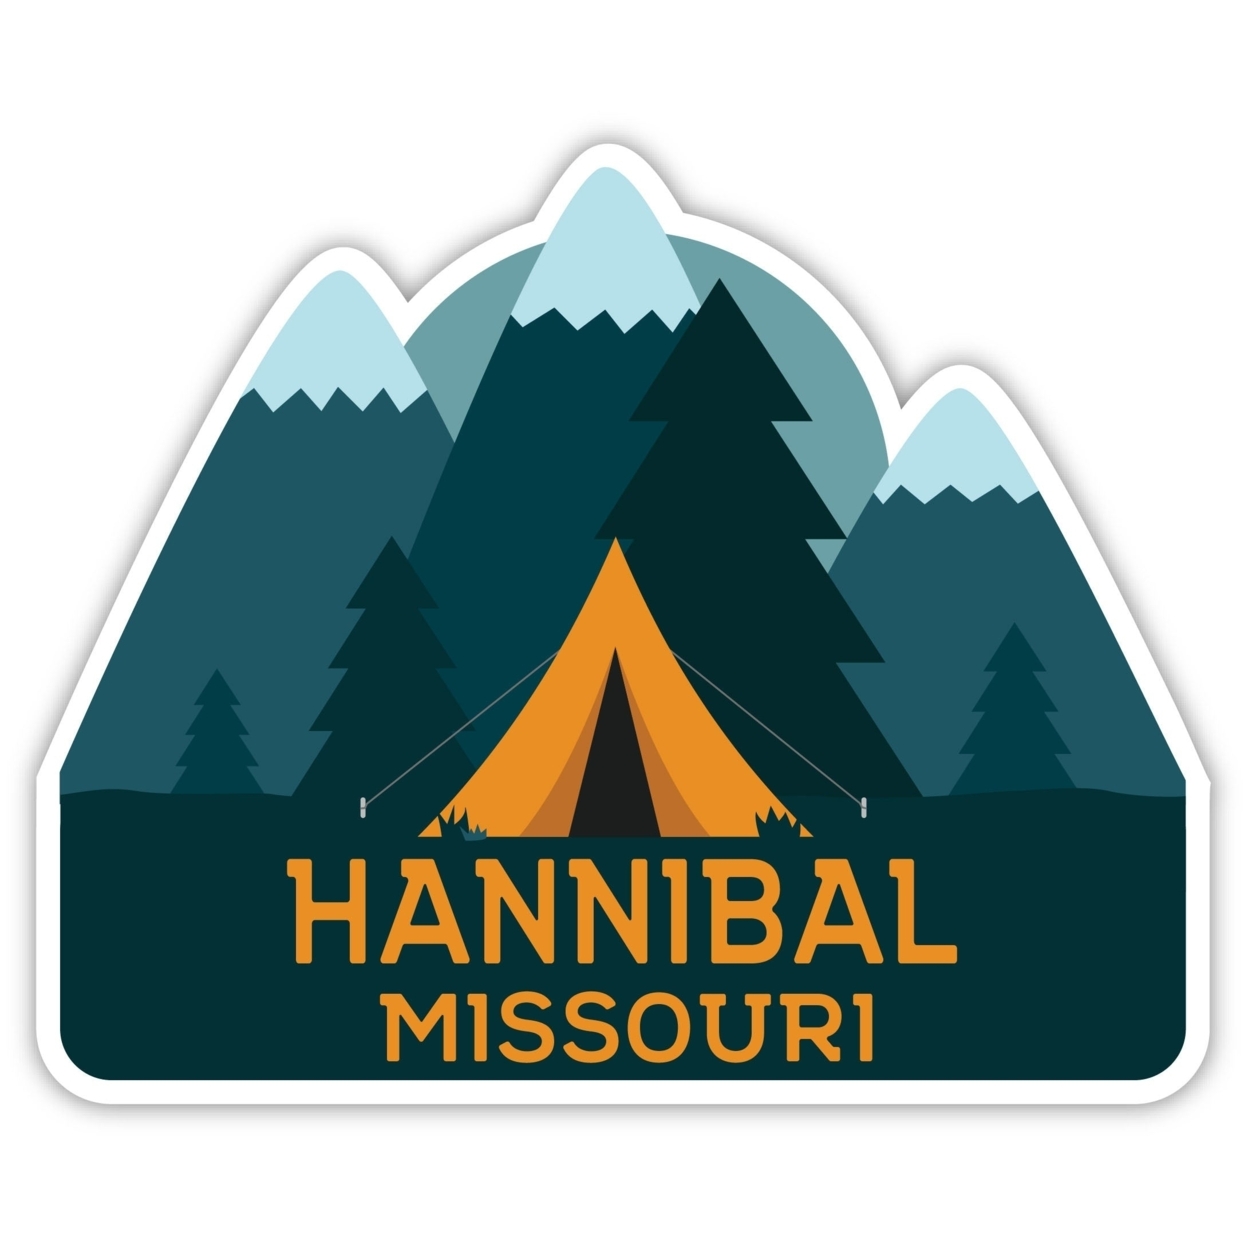 Hannibal Missouri Souvenir Decorative Stickers (Choose Theme And Size) - Single Unit, 8-Inch, Camp Life